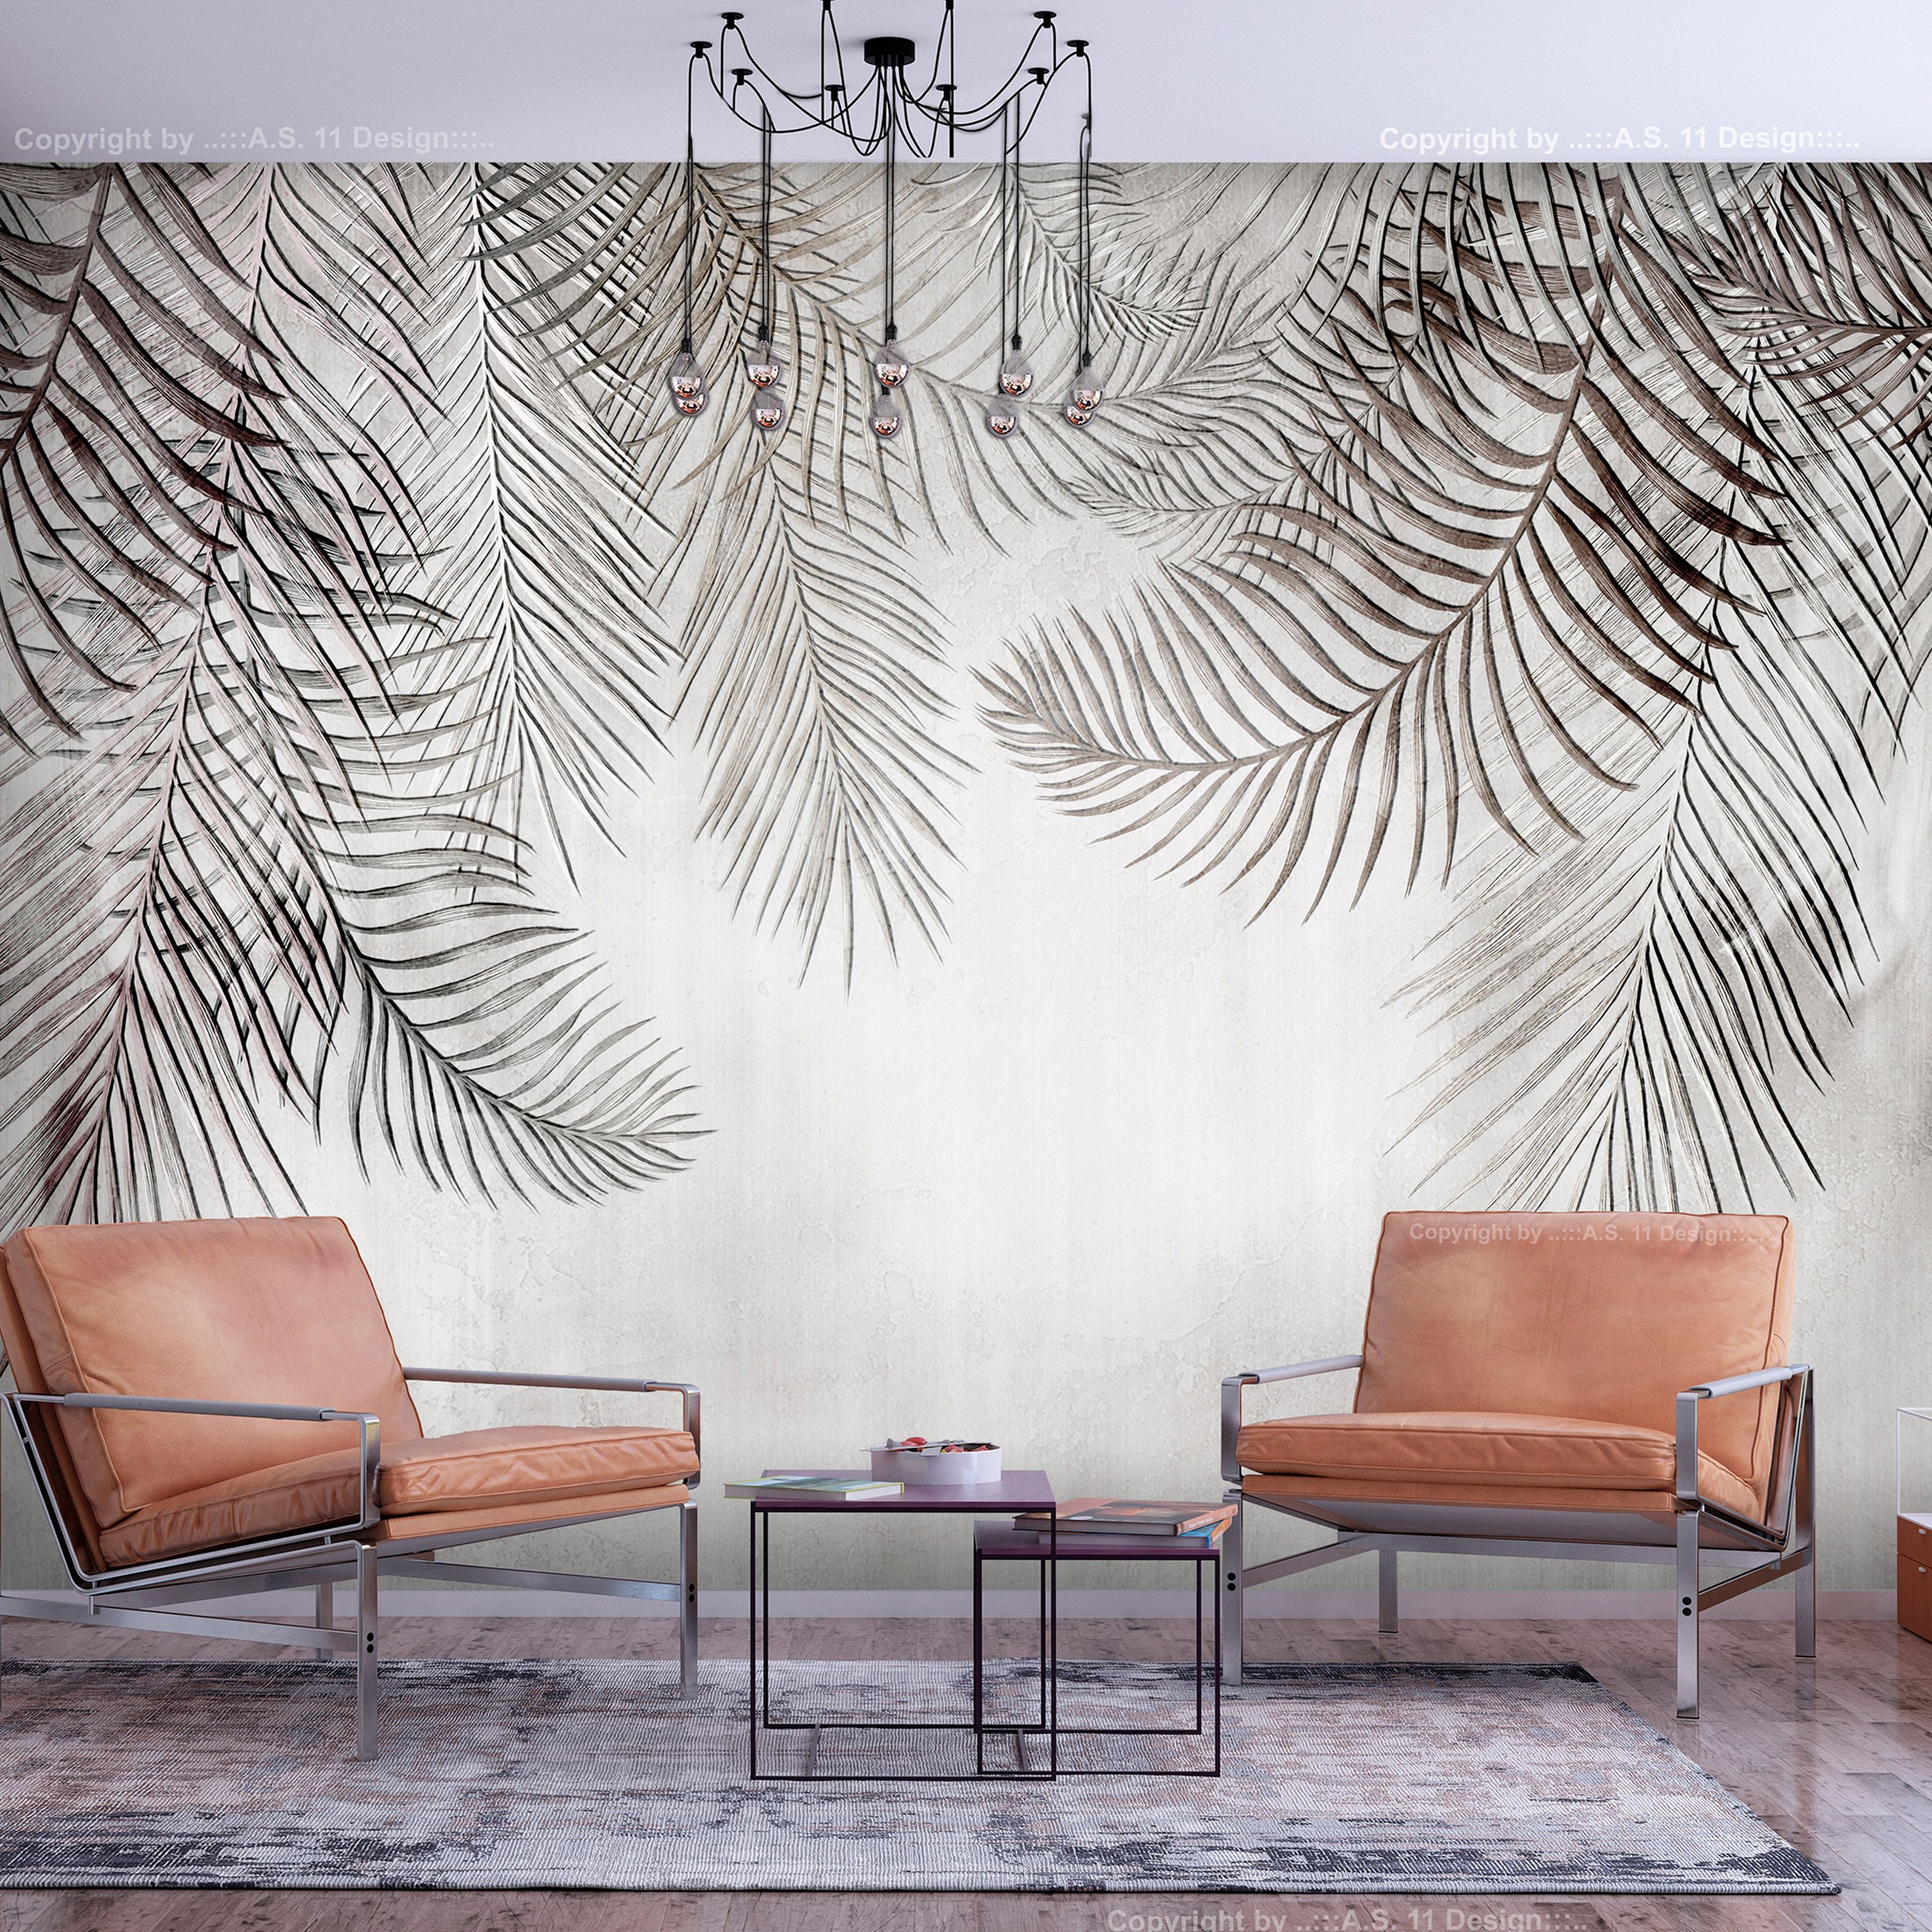 Self-adhesive Wallpaper - Night Palm Trees - 245x175